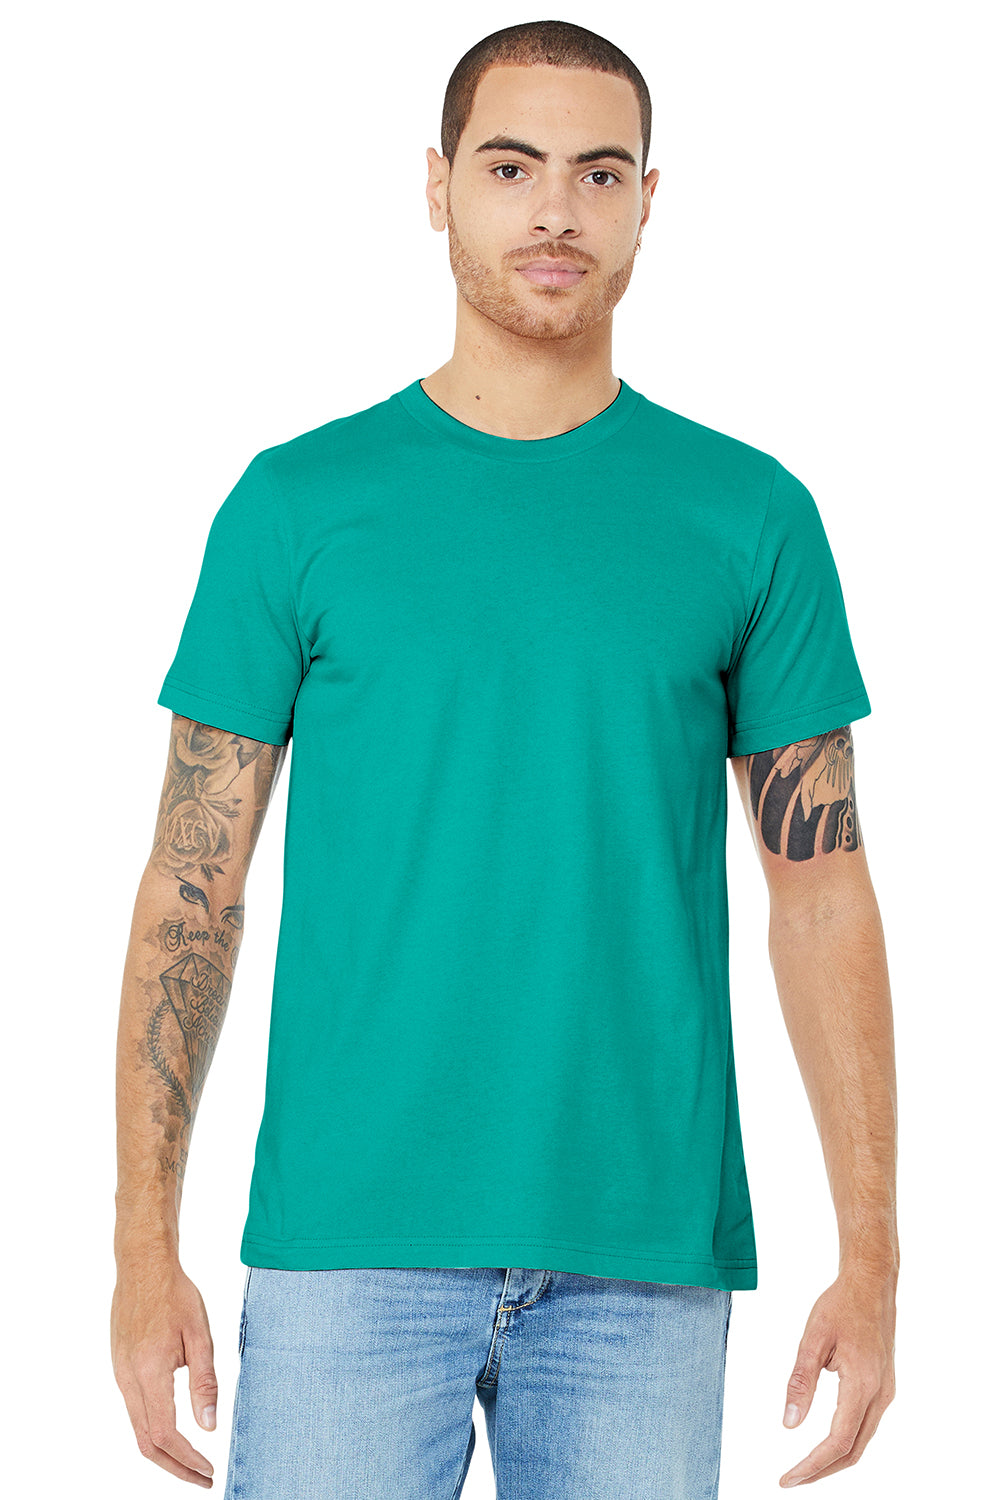 Bella + Canvas BC3001/3001C Mens Jersey Short Sleeve Crewneck T-Shirt Teal Green Model Front